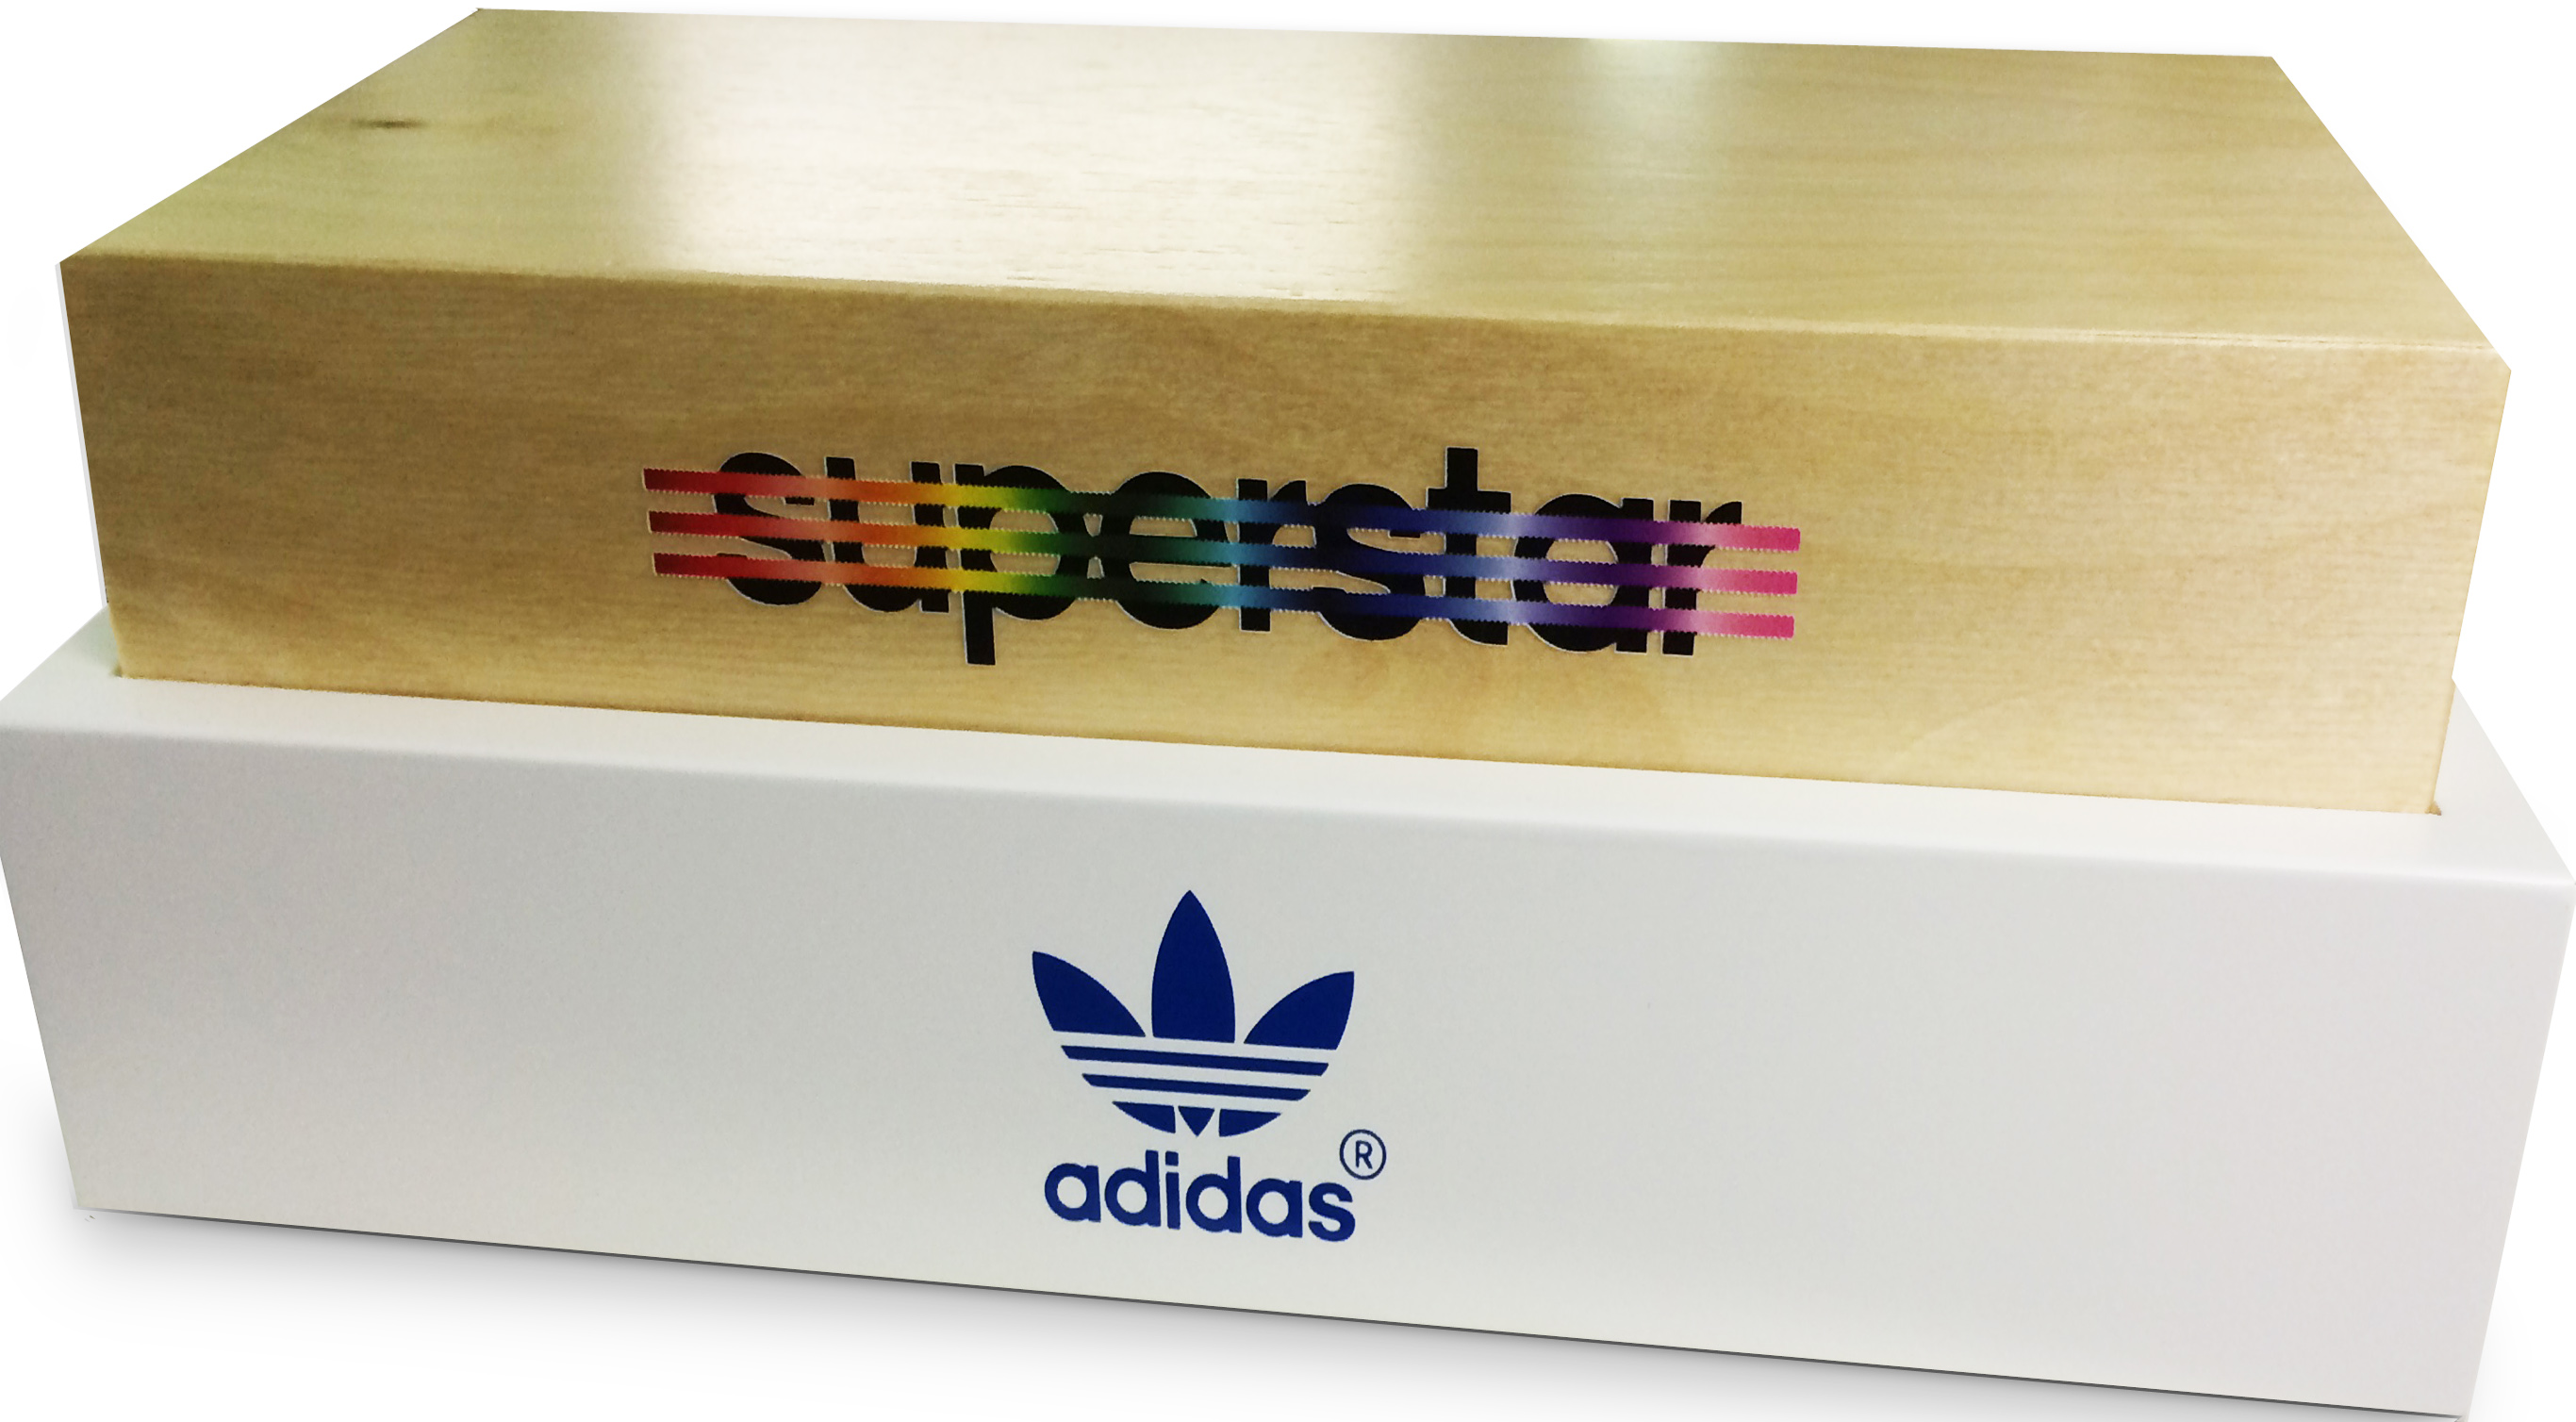 Adidas Superstar shoe riser Wood, screenprint logos and acrylic